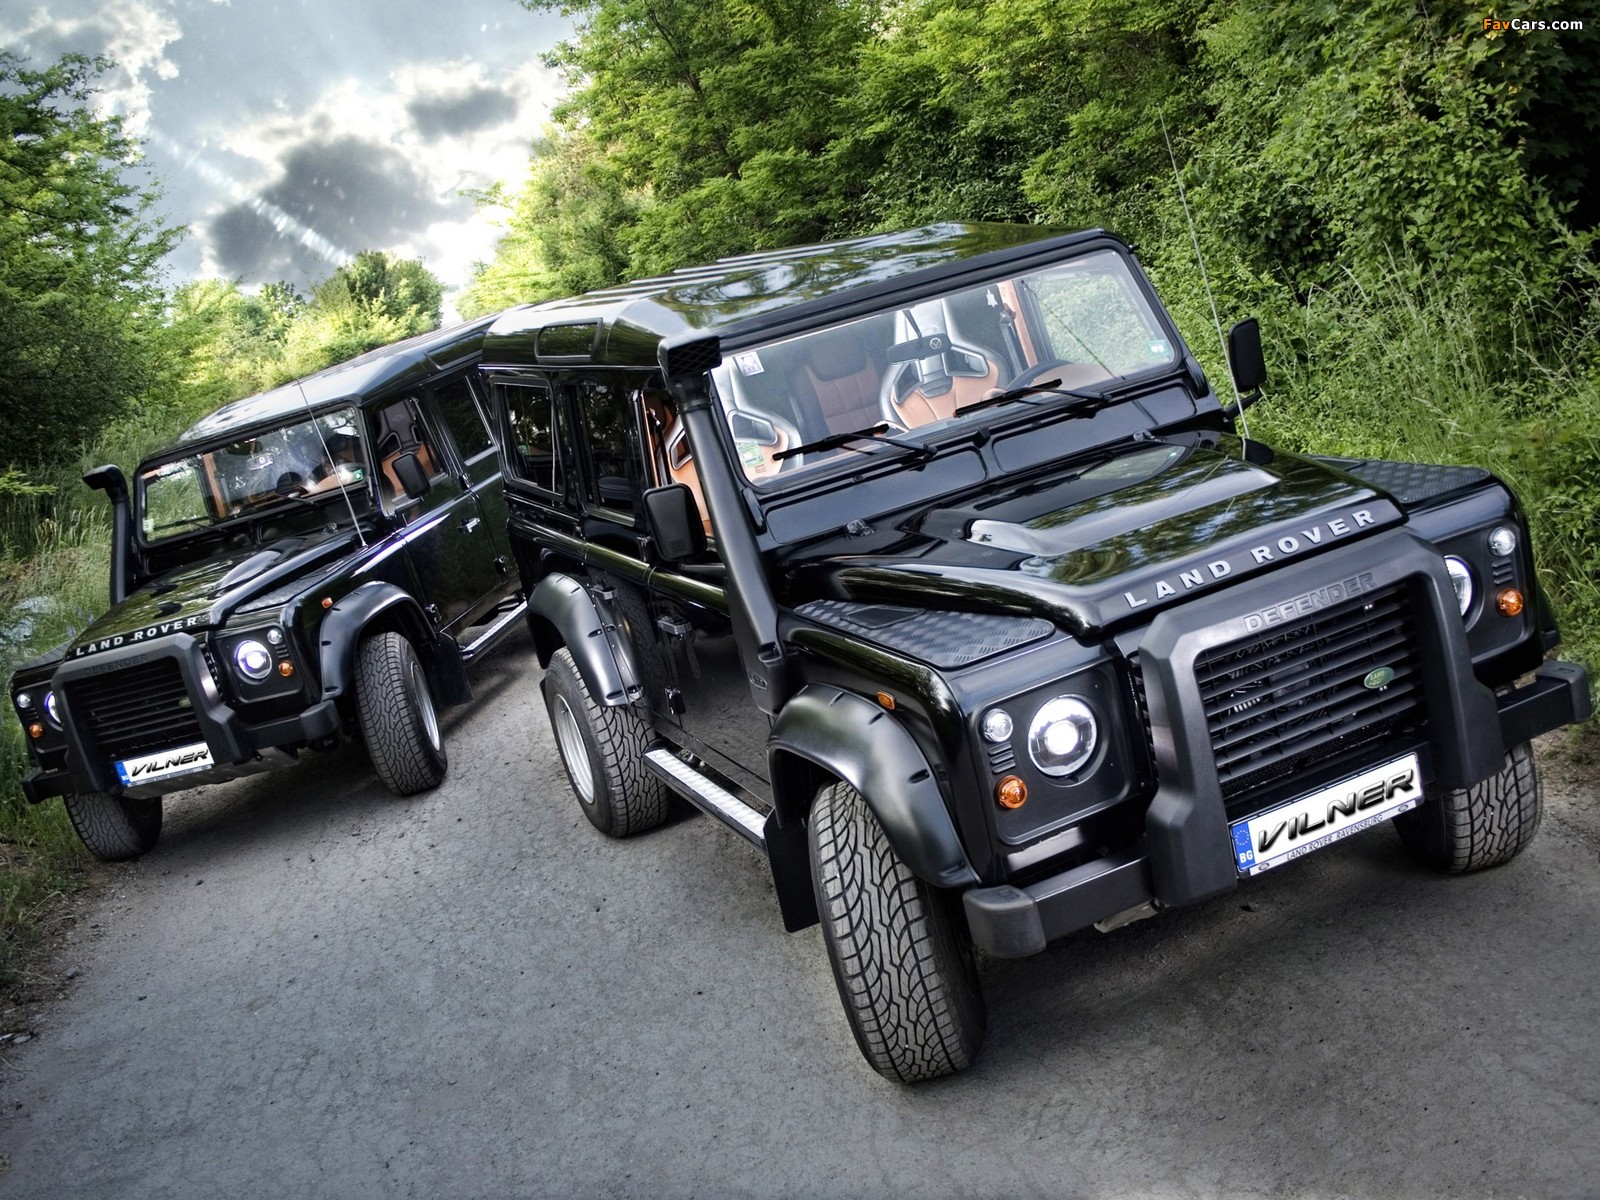 Vilner Studio Land Rover Defender The Twins 2011 photos (1600 x 1200)